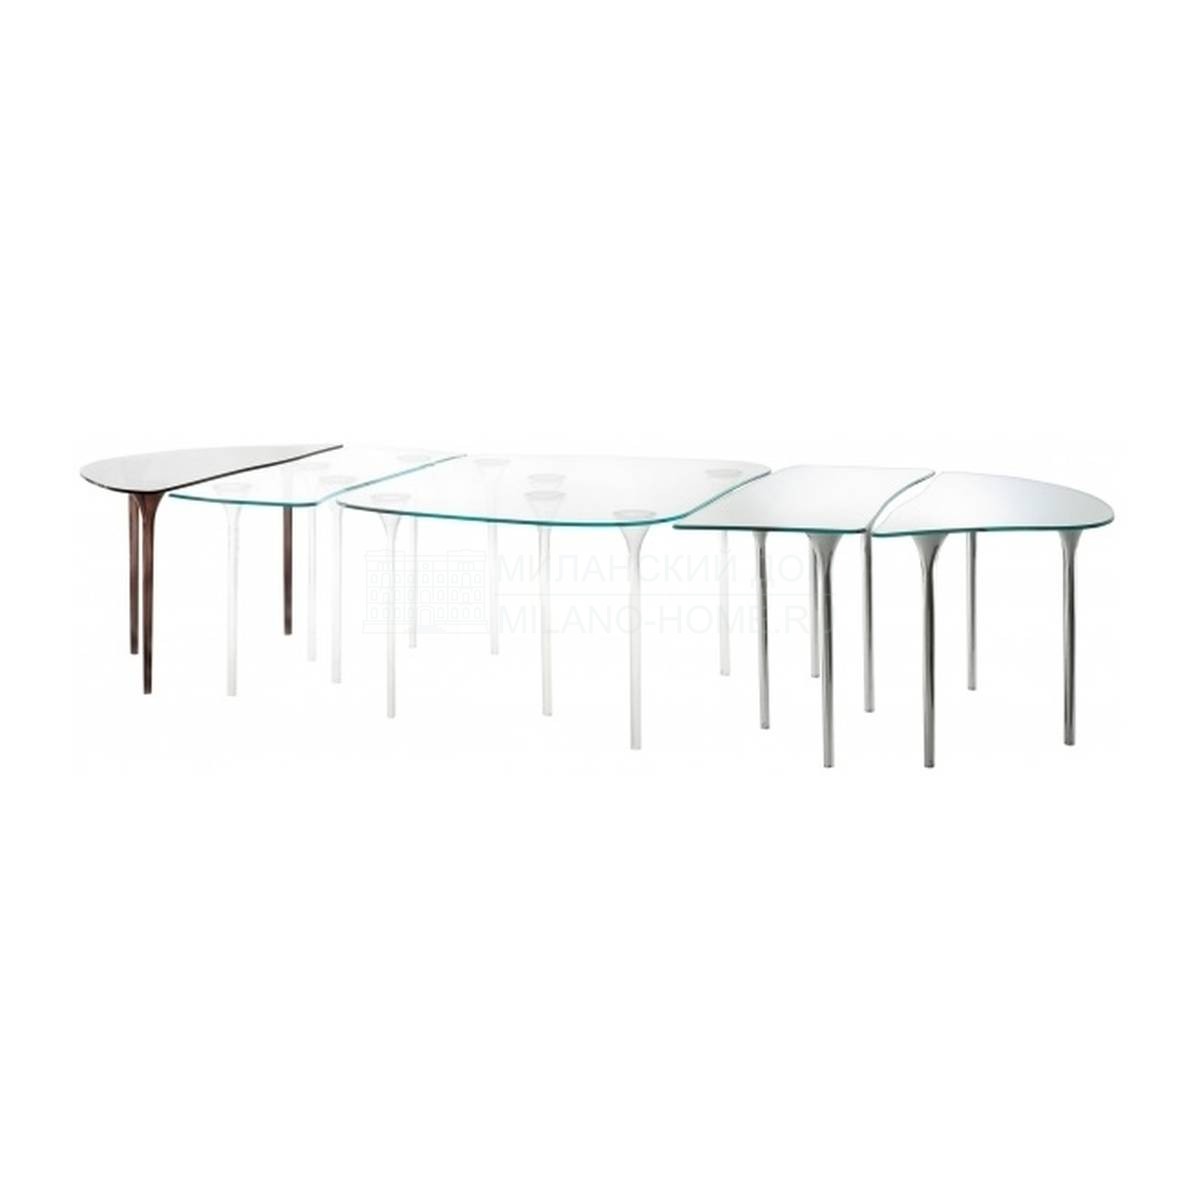 Стеклянный стол Specchio di Venere из Италии фабрики GLAS ITALIA